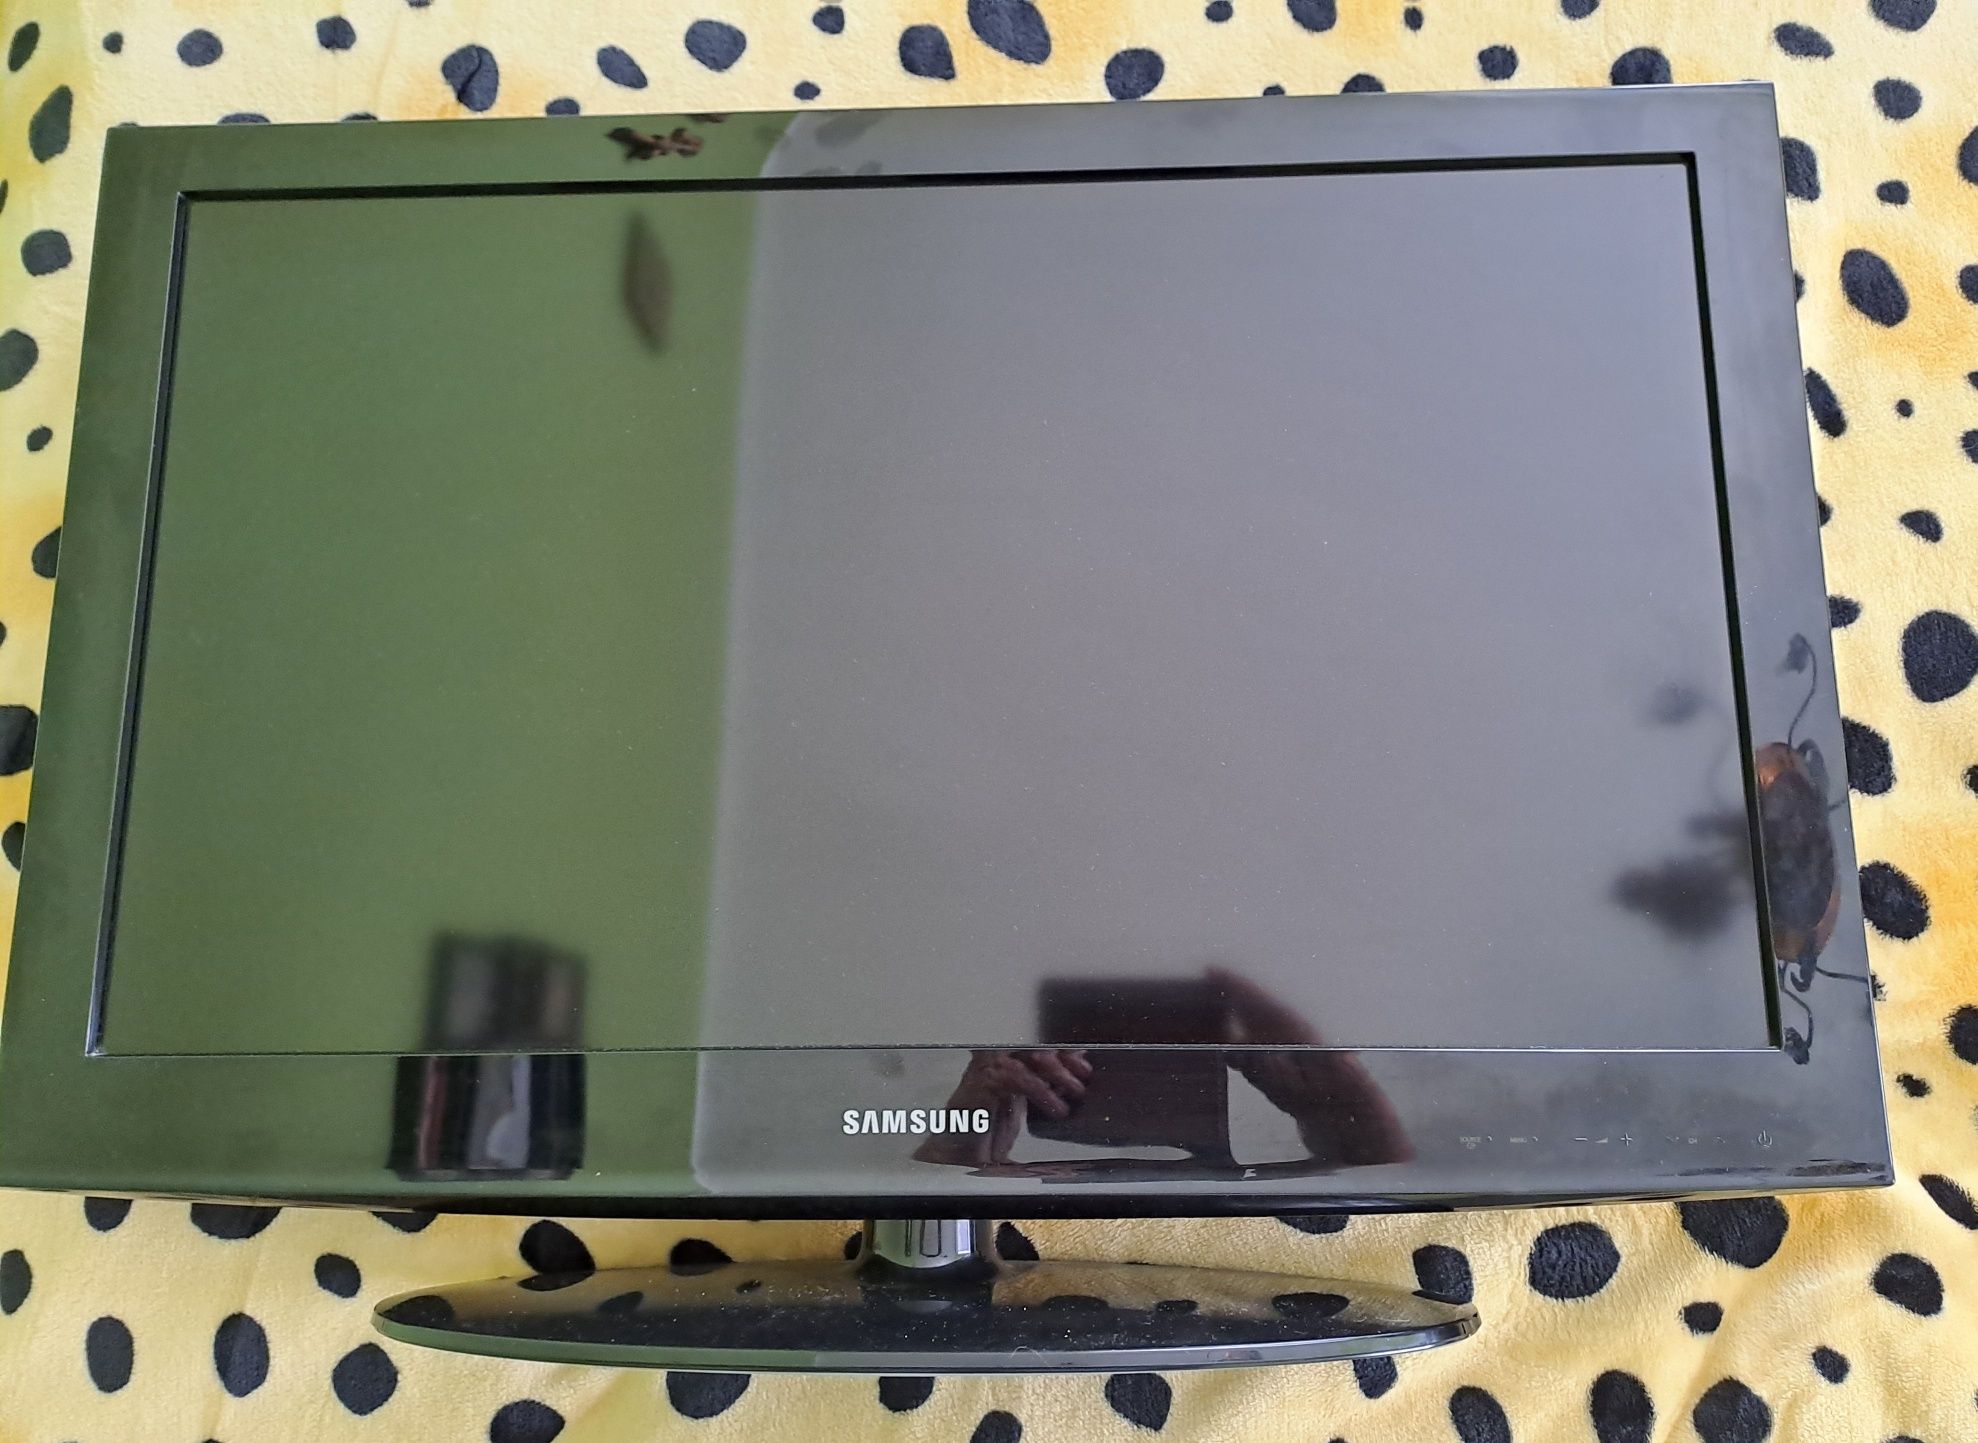 Telewizor Samsung 32 cale, teraz 100 zł taniej